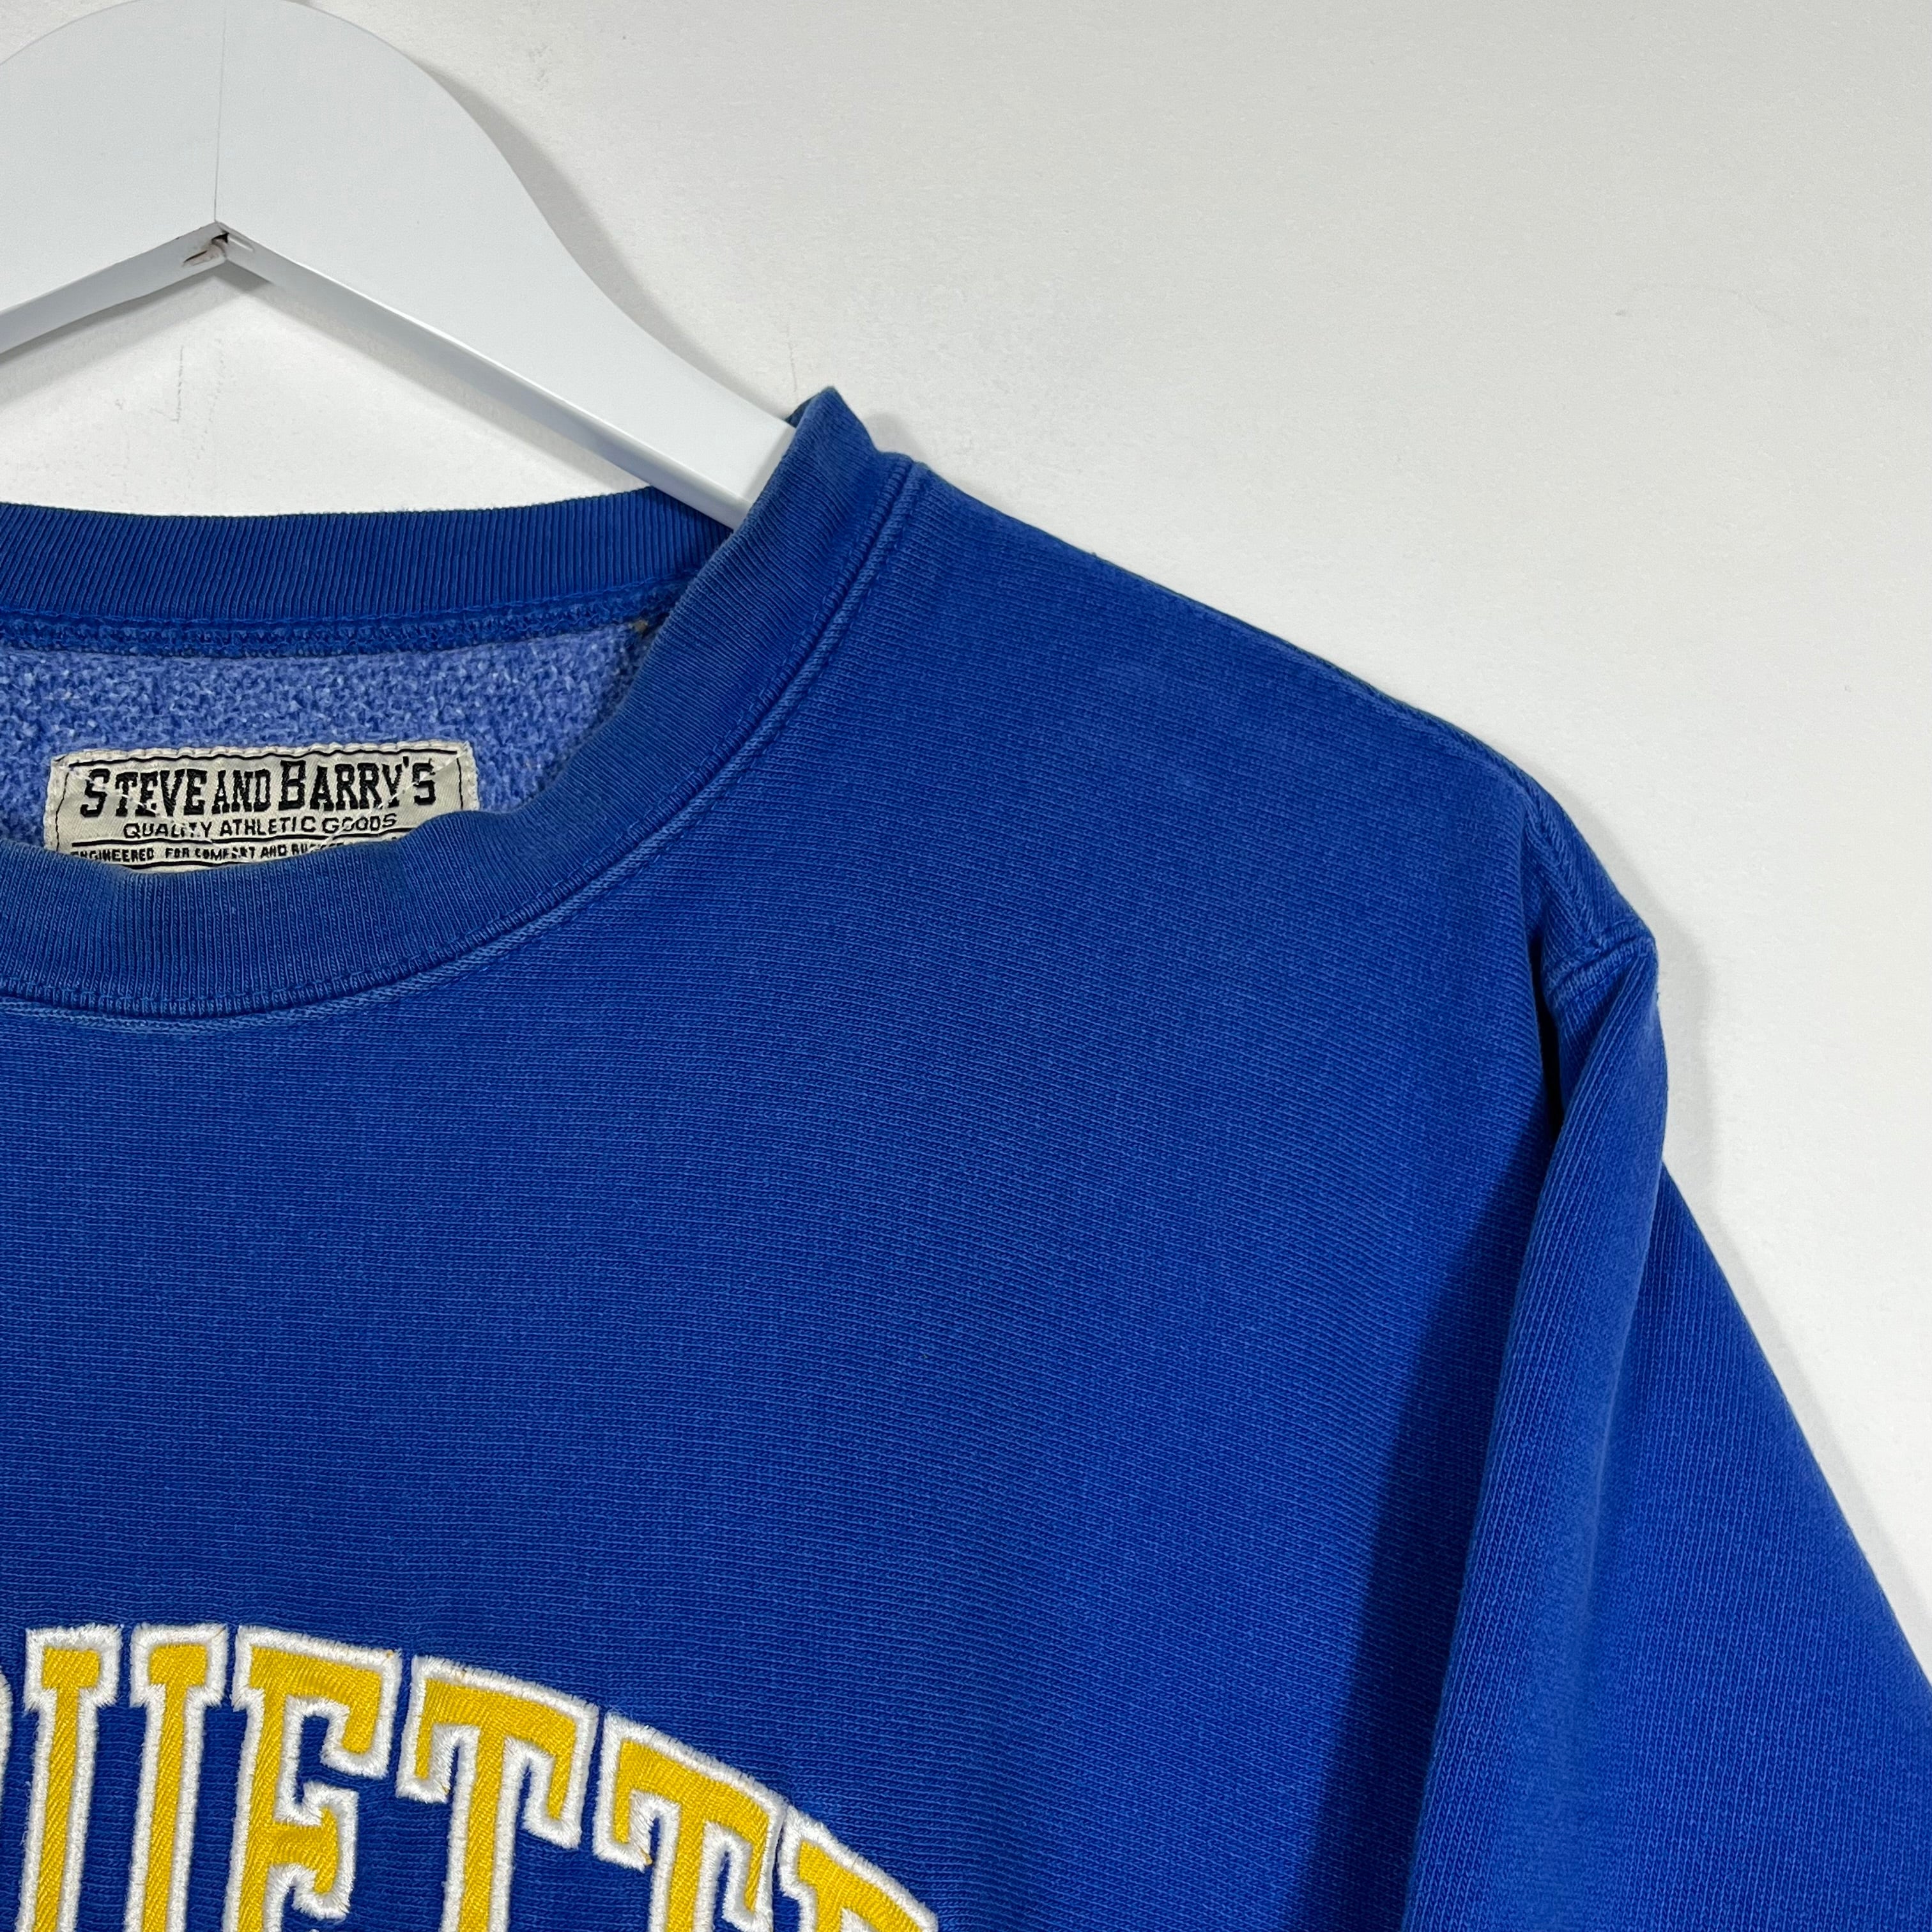 Vintage Marquette University Crewneck Sweatshirt - Women's Medium